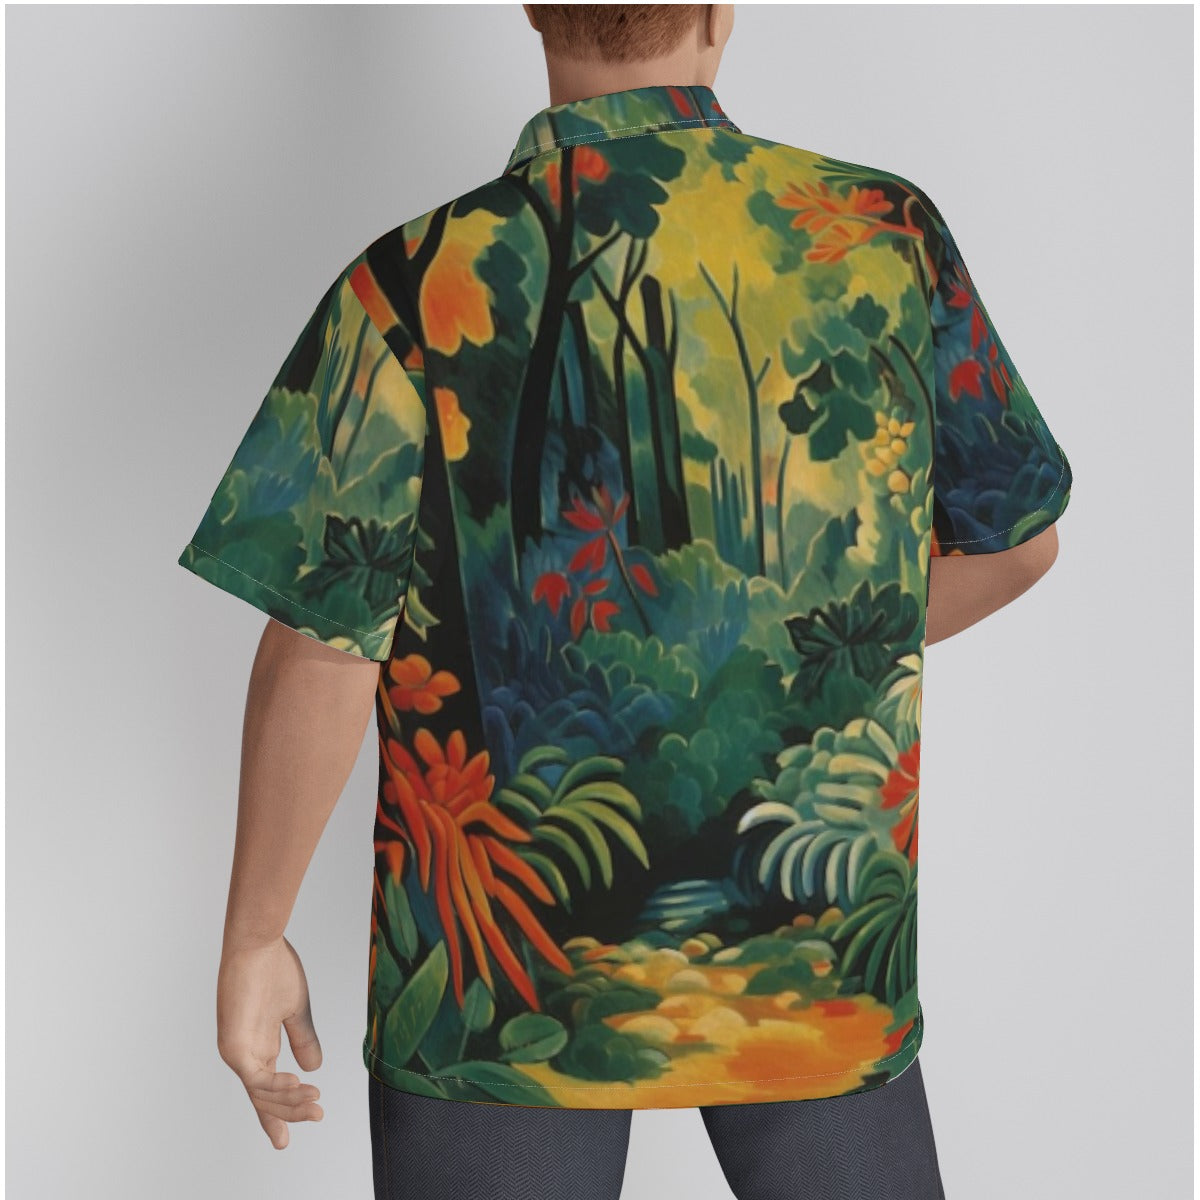 3R96A All-Over Print Men's Hawaiian Shirt With Button Closure |115GSM Cotton poplin